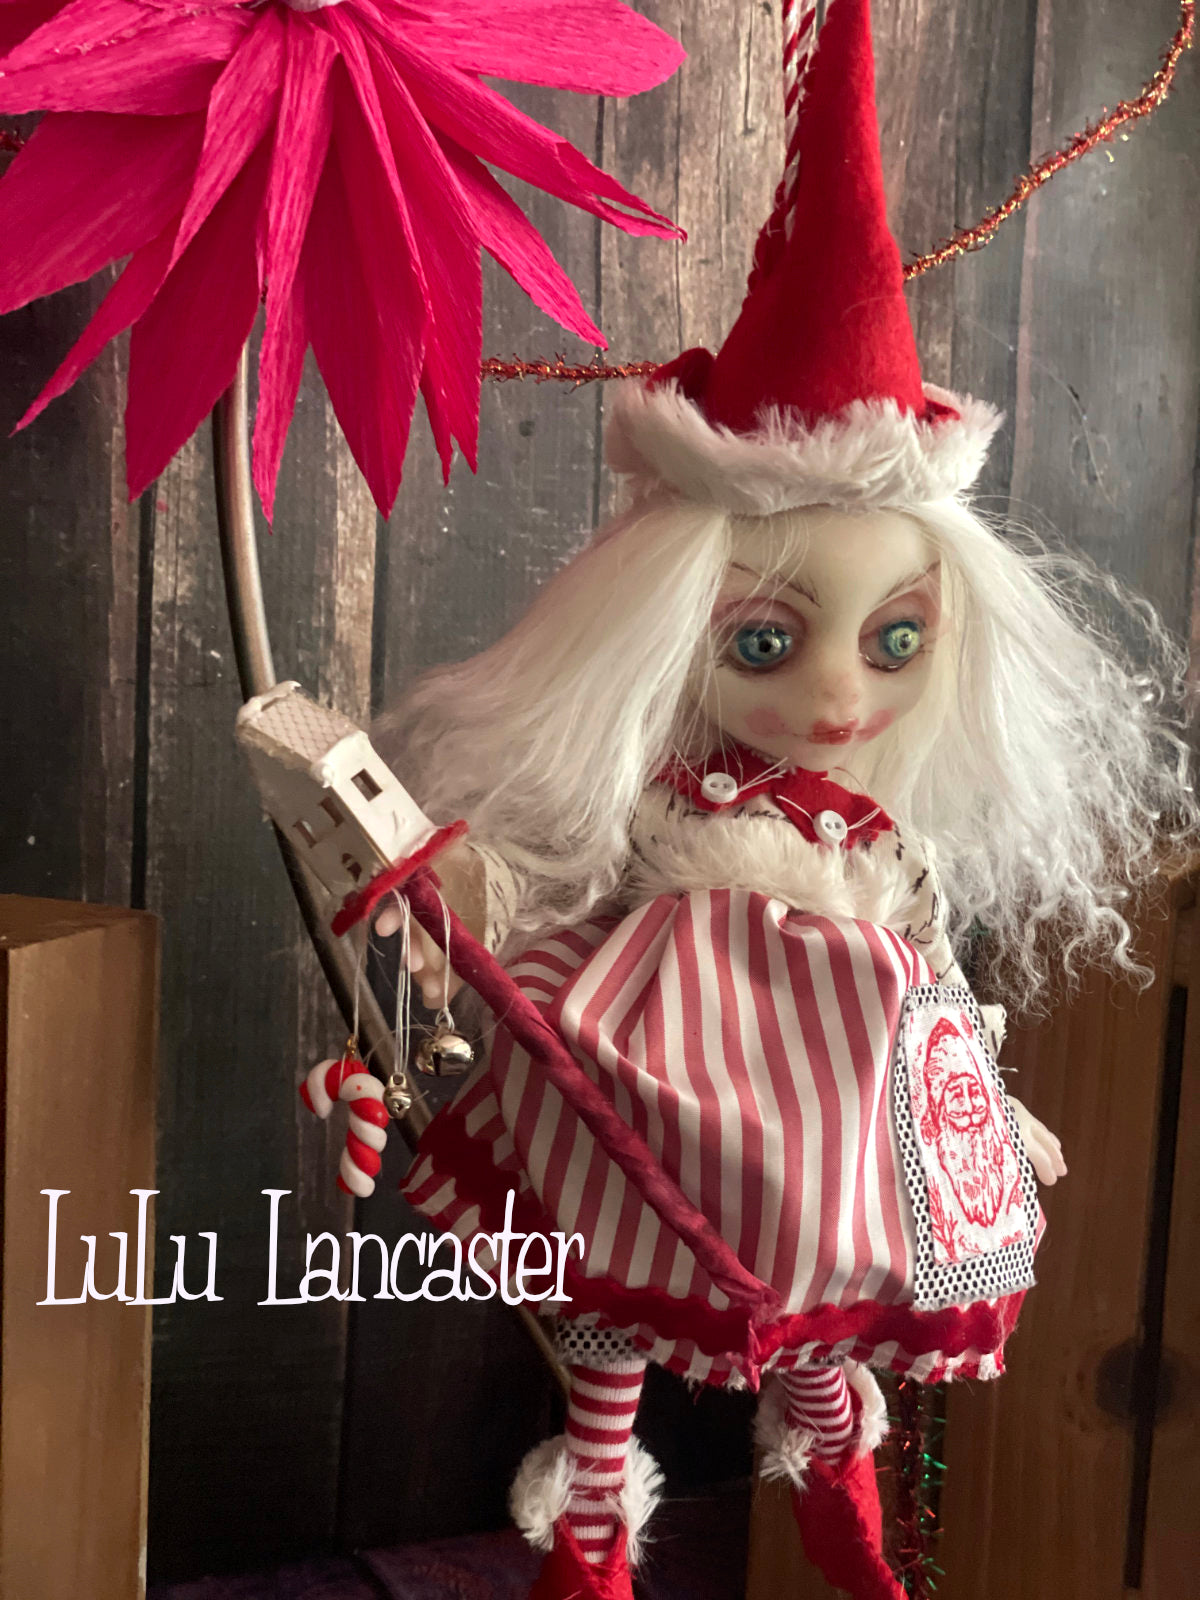 Pieni Mini hanging Christmas Elf Original LuLu Lancaster Art Doll